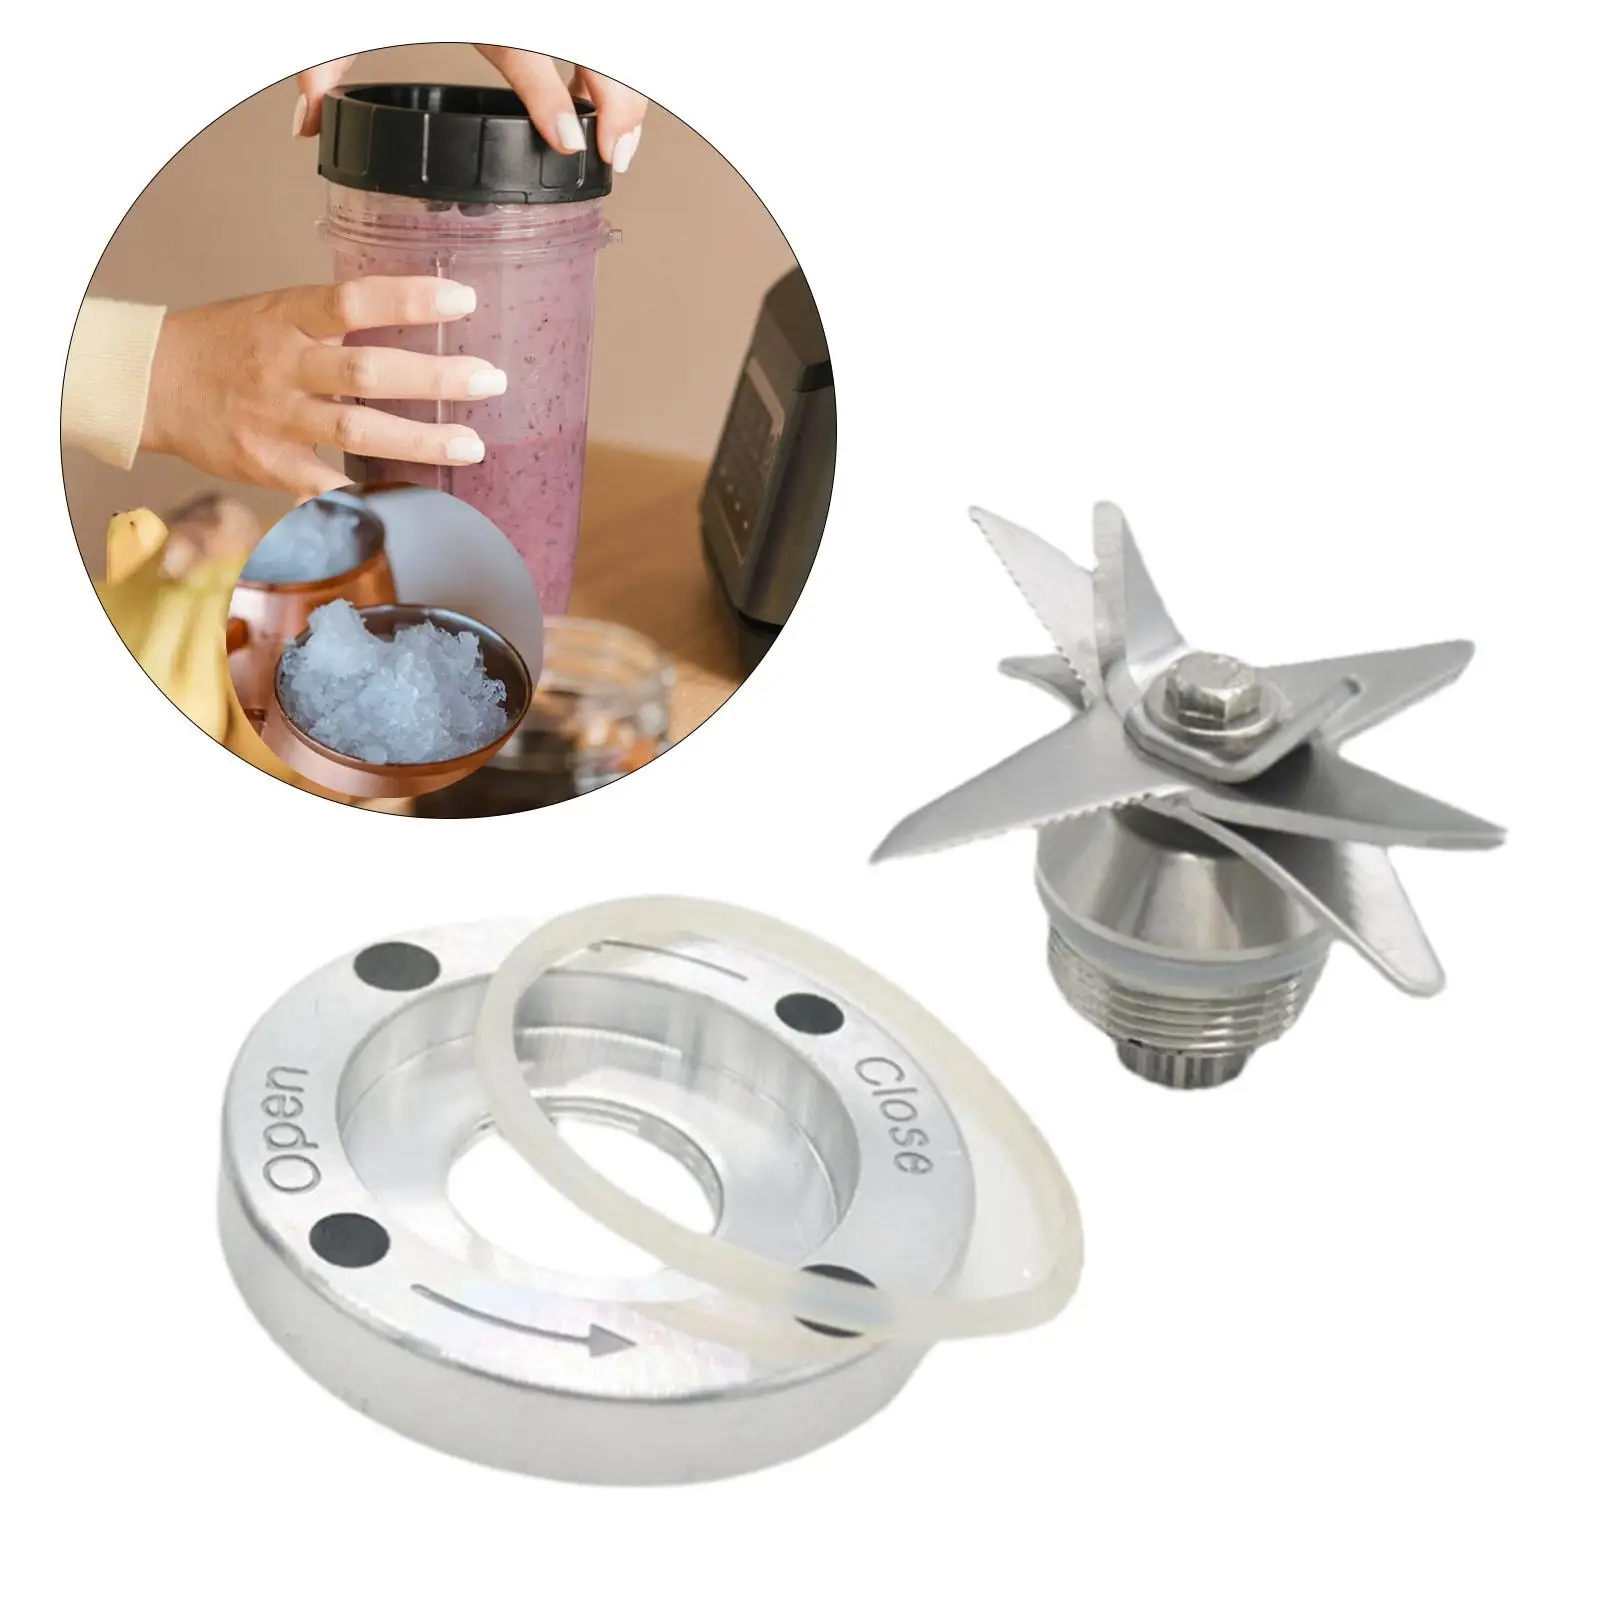 Blender Tool Kit Replacement Household Kitchen Cooking Tool Juicer Blender Parts for 2L Jar Supplies